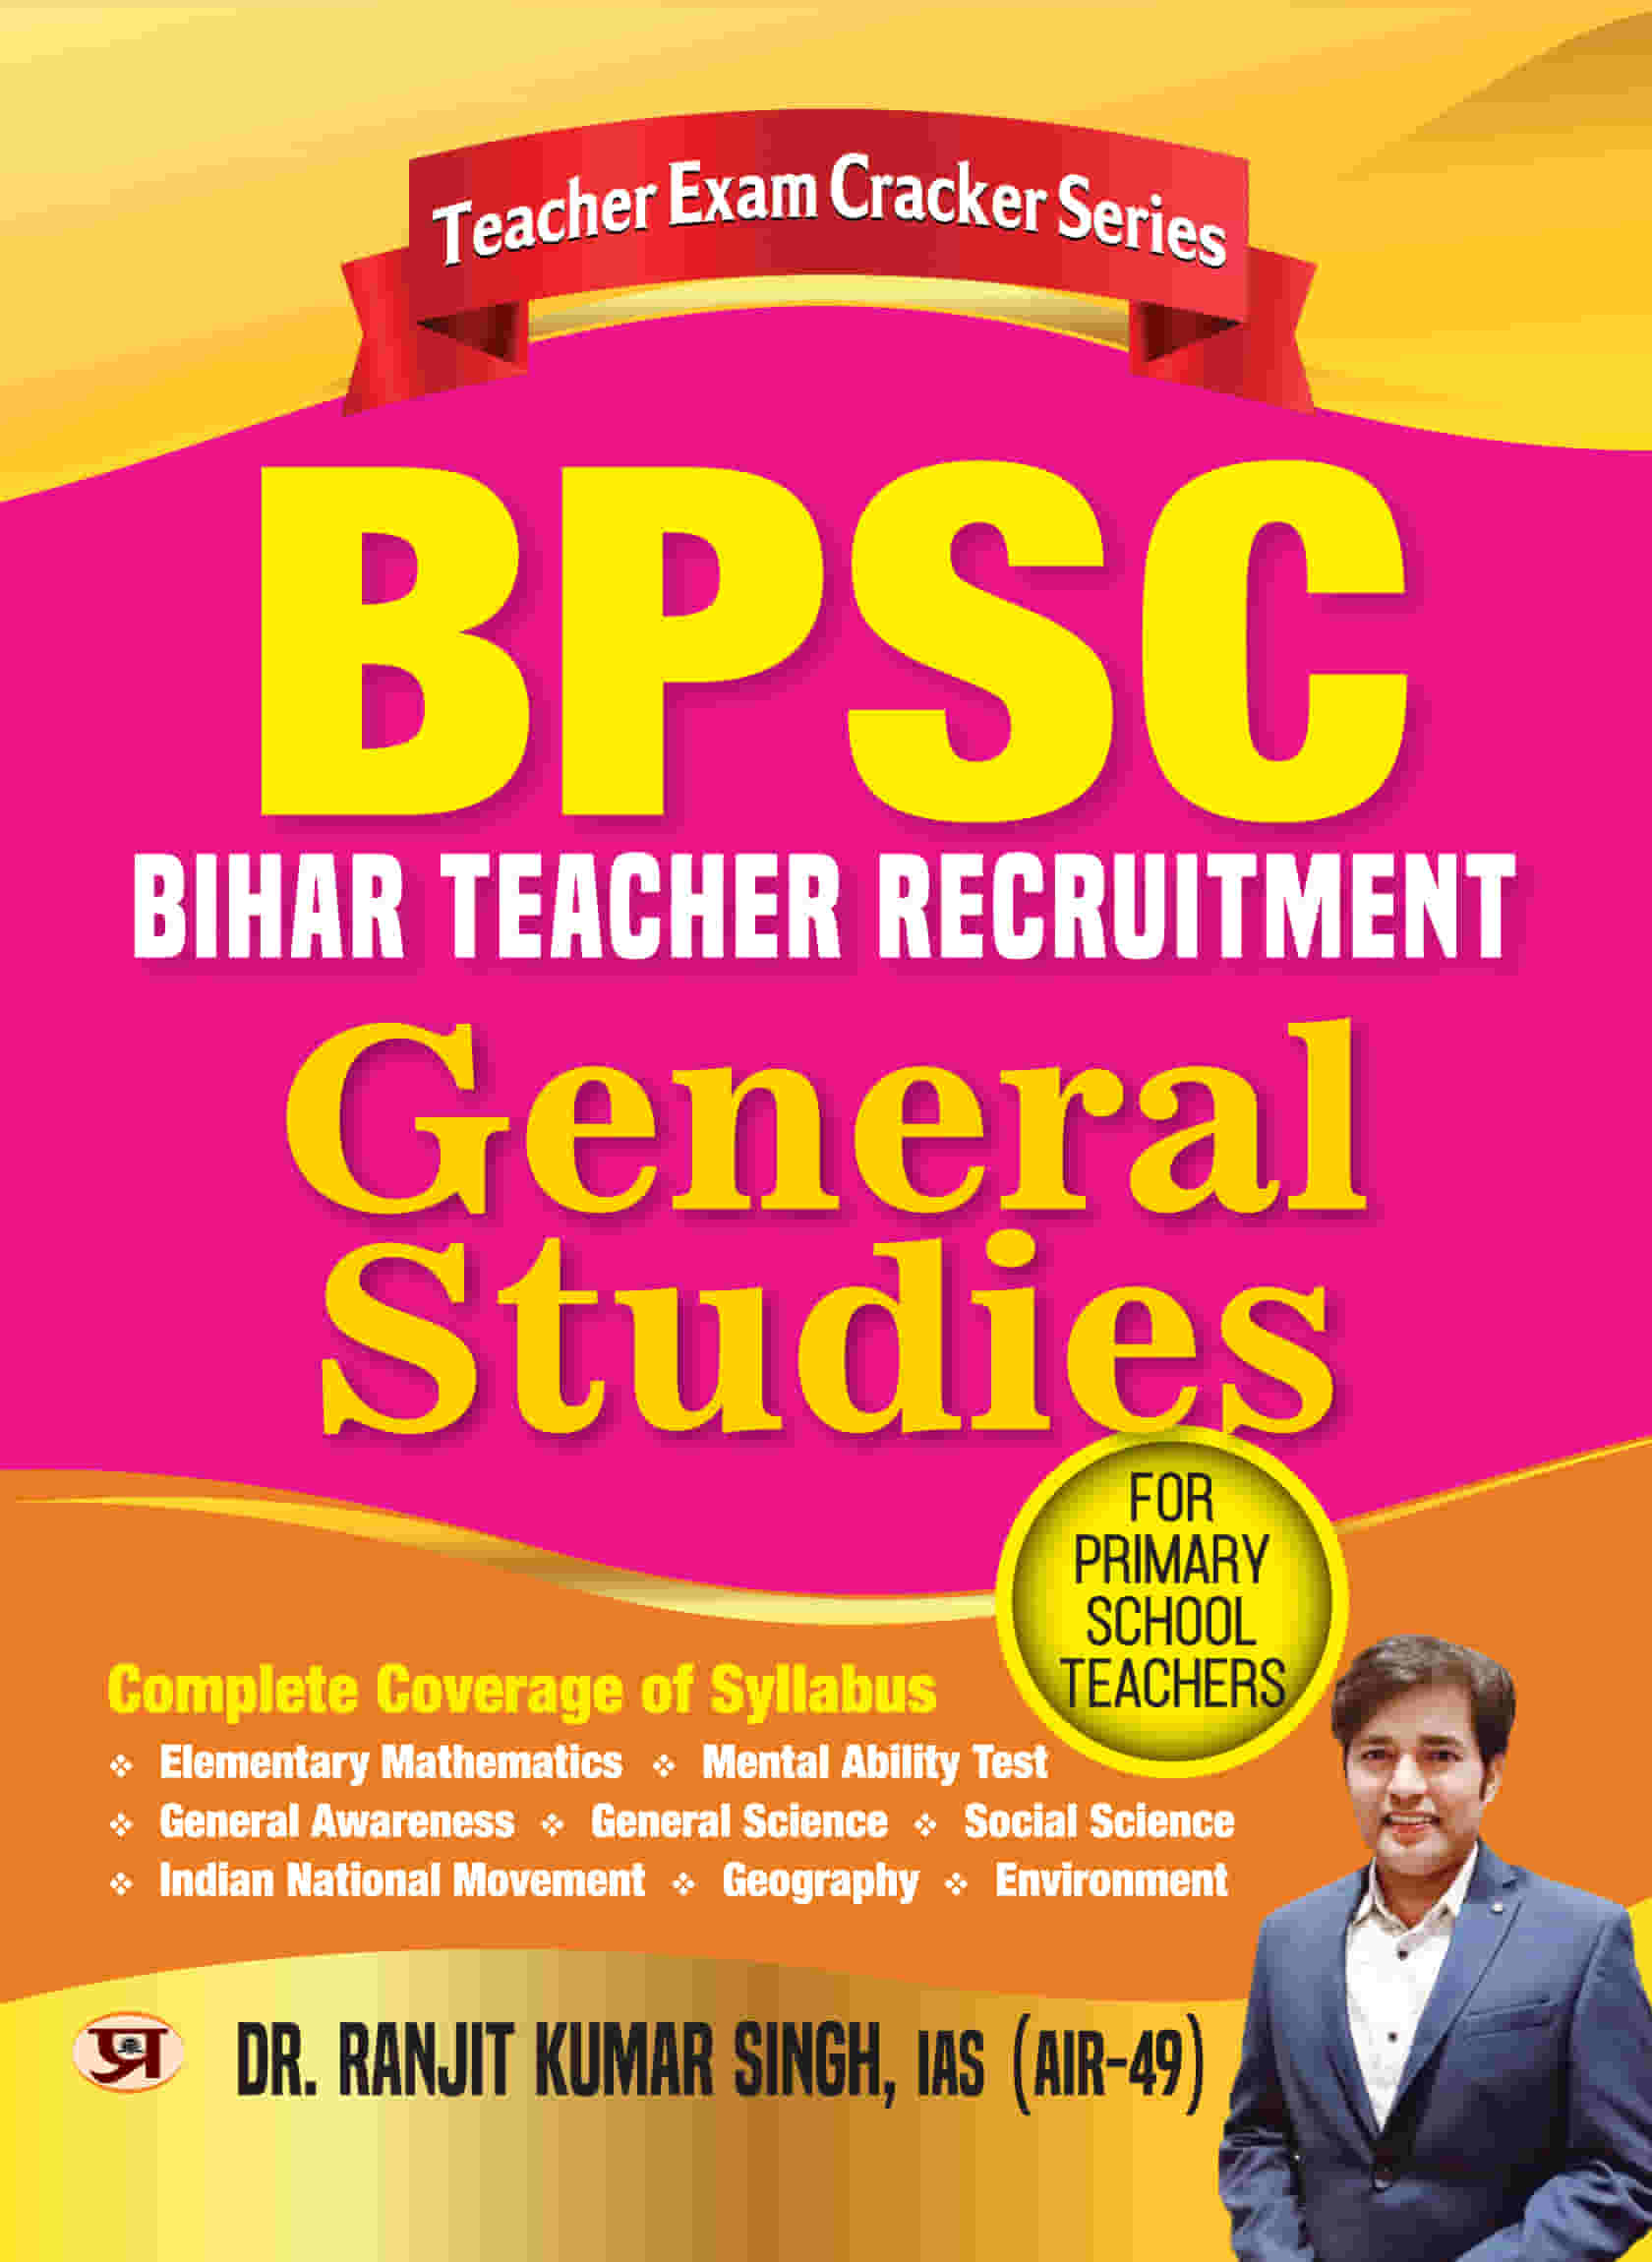 BPSC Bihar Teacher Recruitment General Studies 